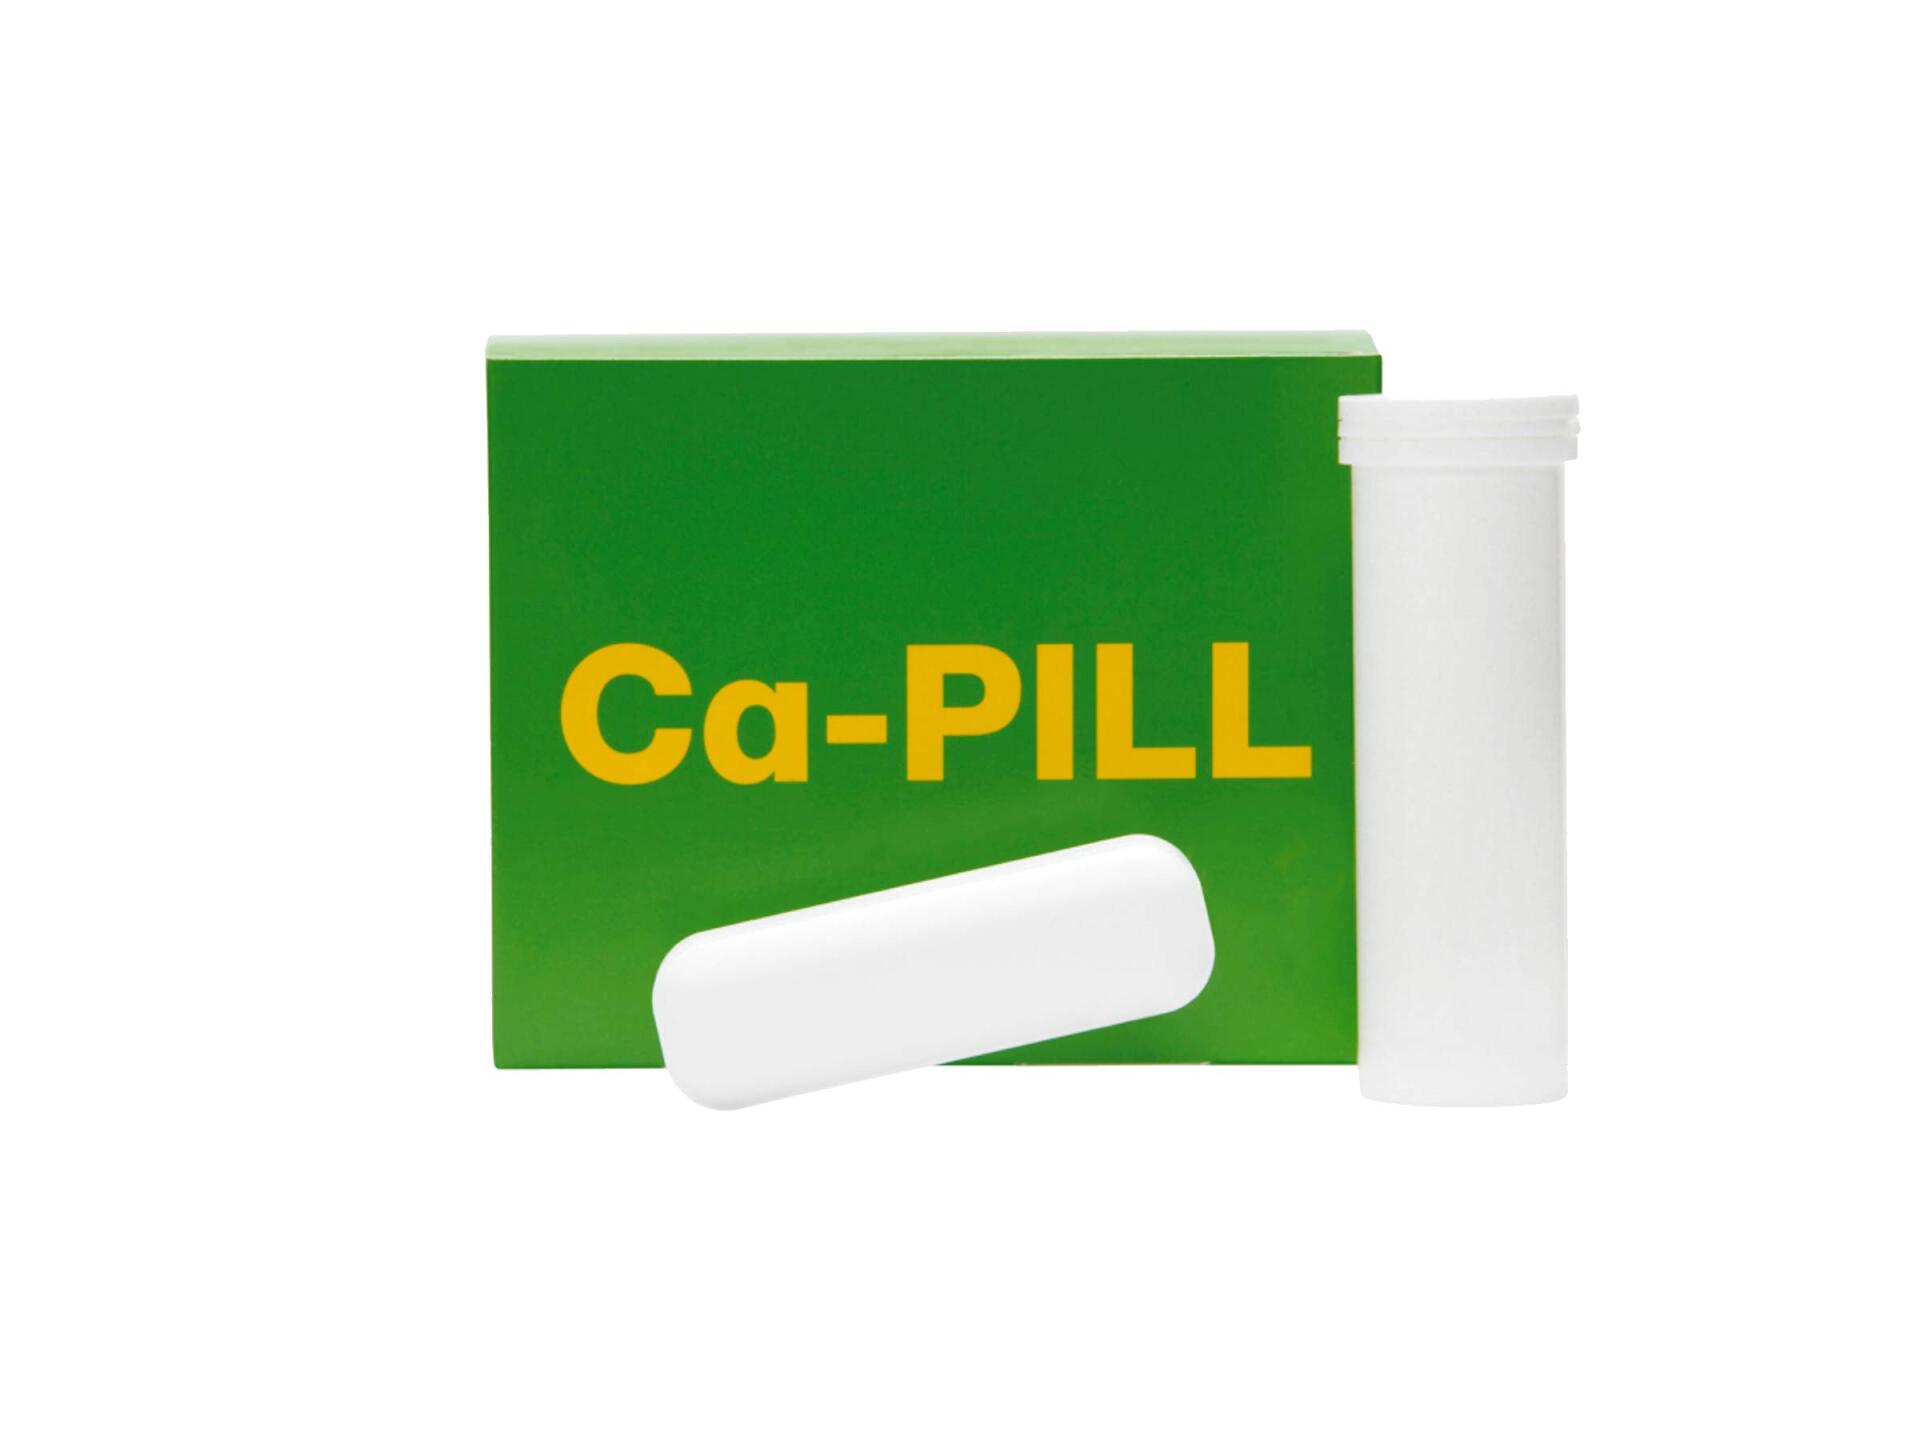 Calcium-Pille, ca-pill, Calciummangel Kuh, Milchfieber, Milchfieber Kuh